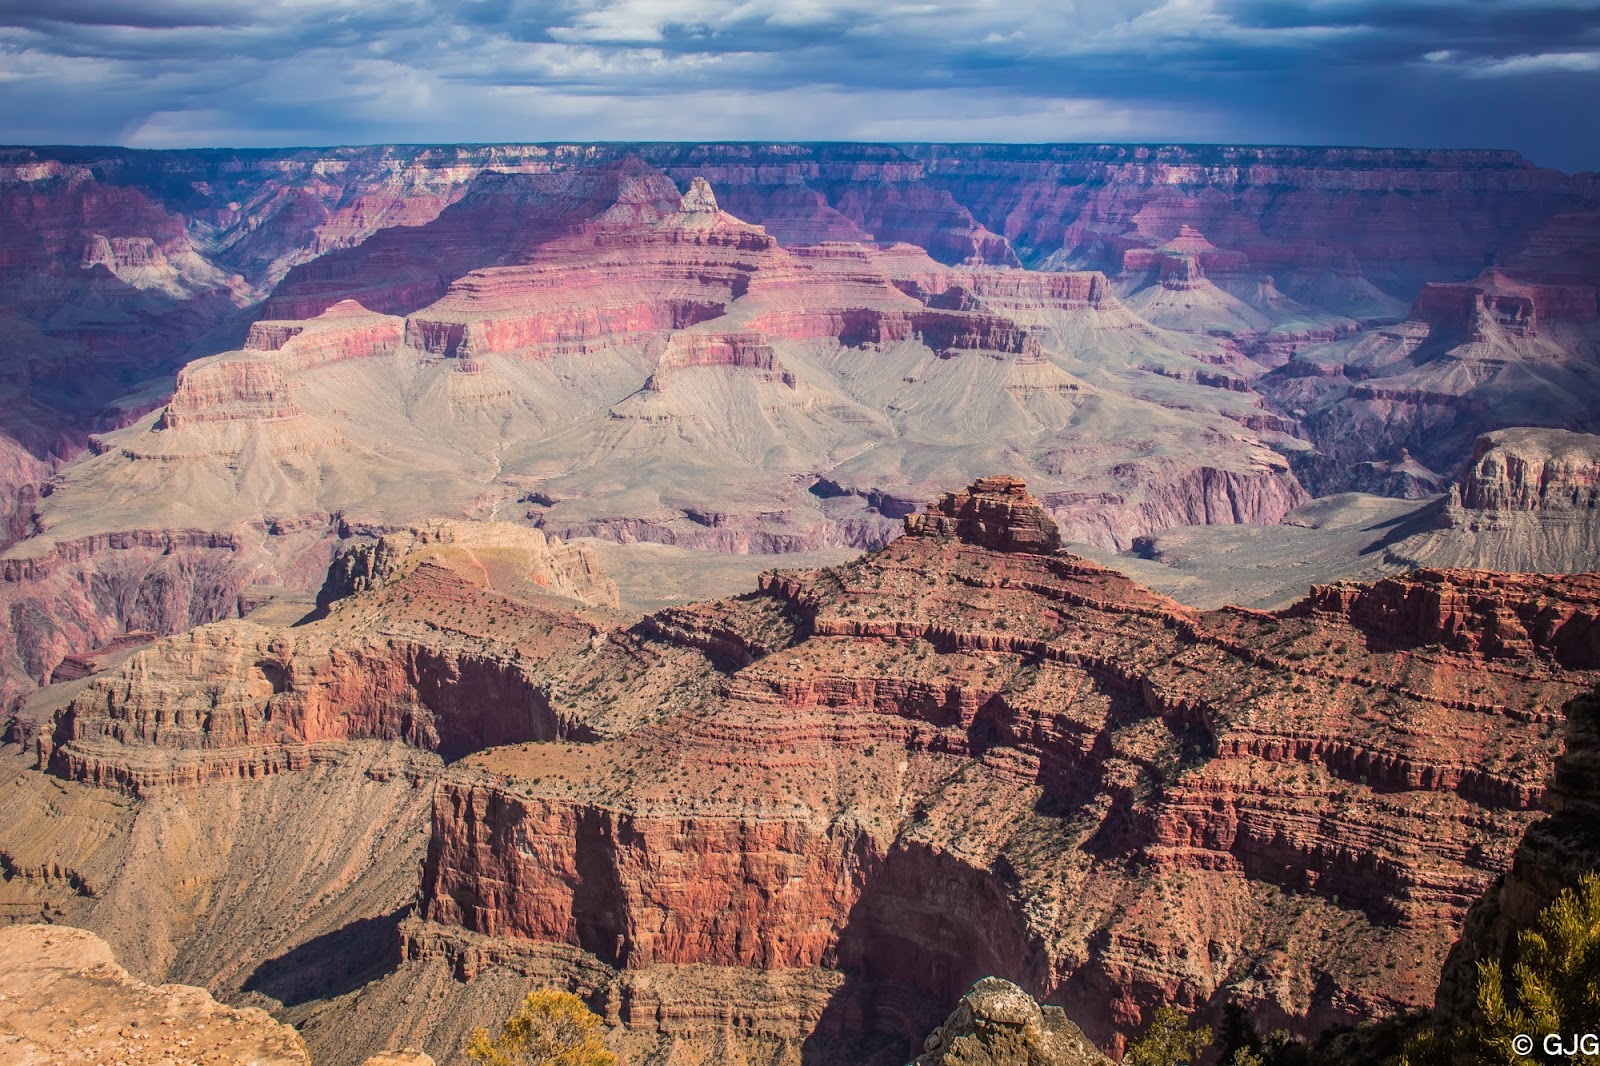 The Grand Canyon National Park in Arizona, USA